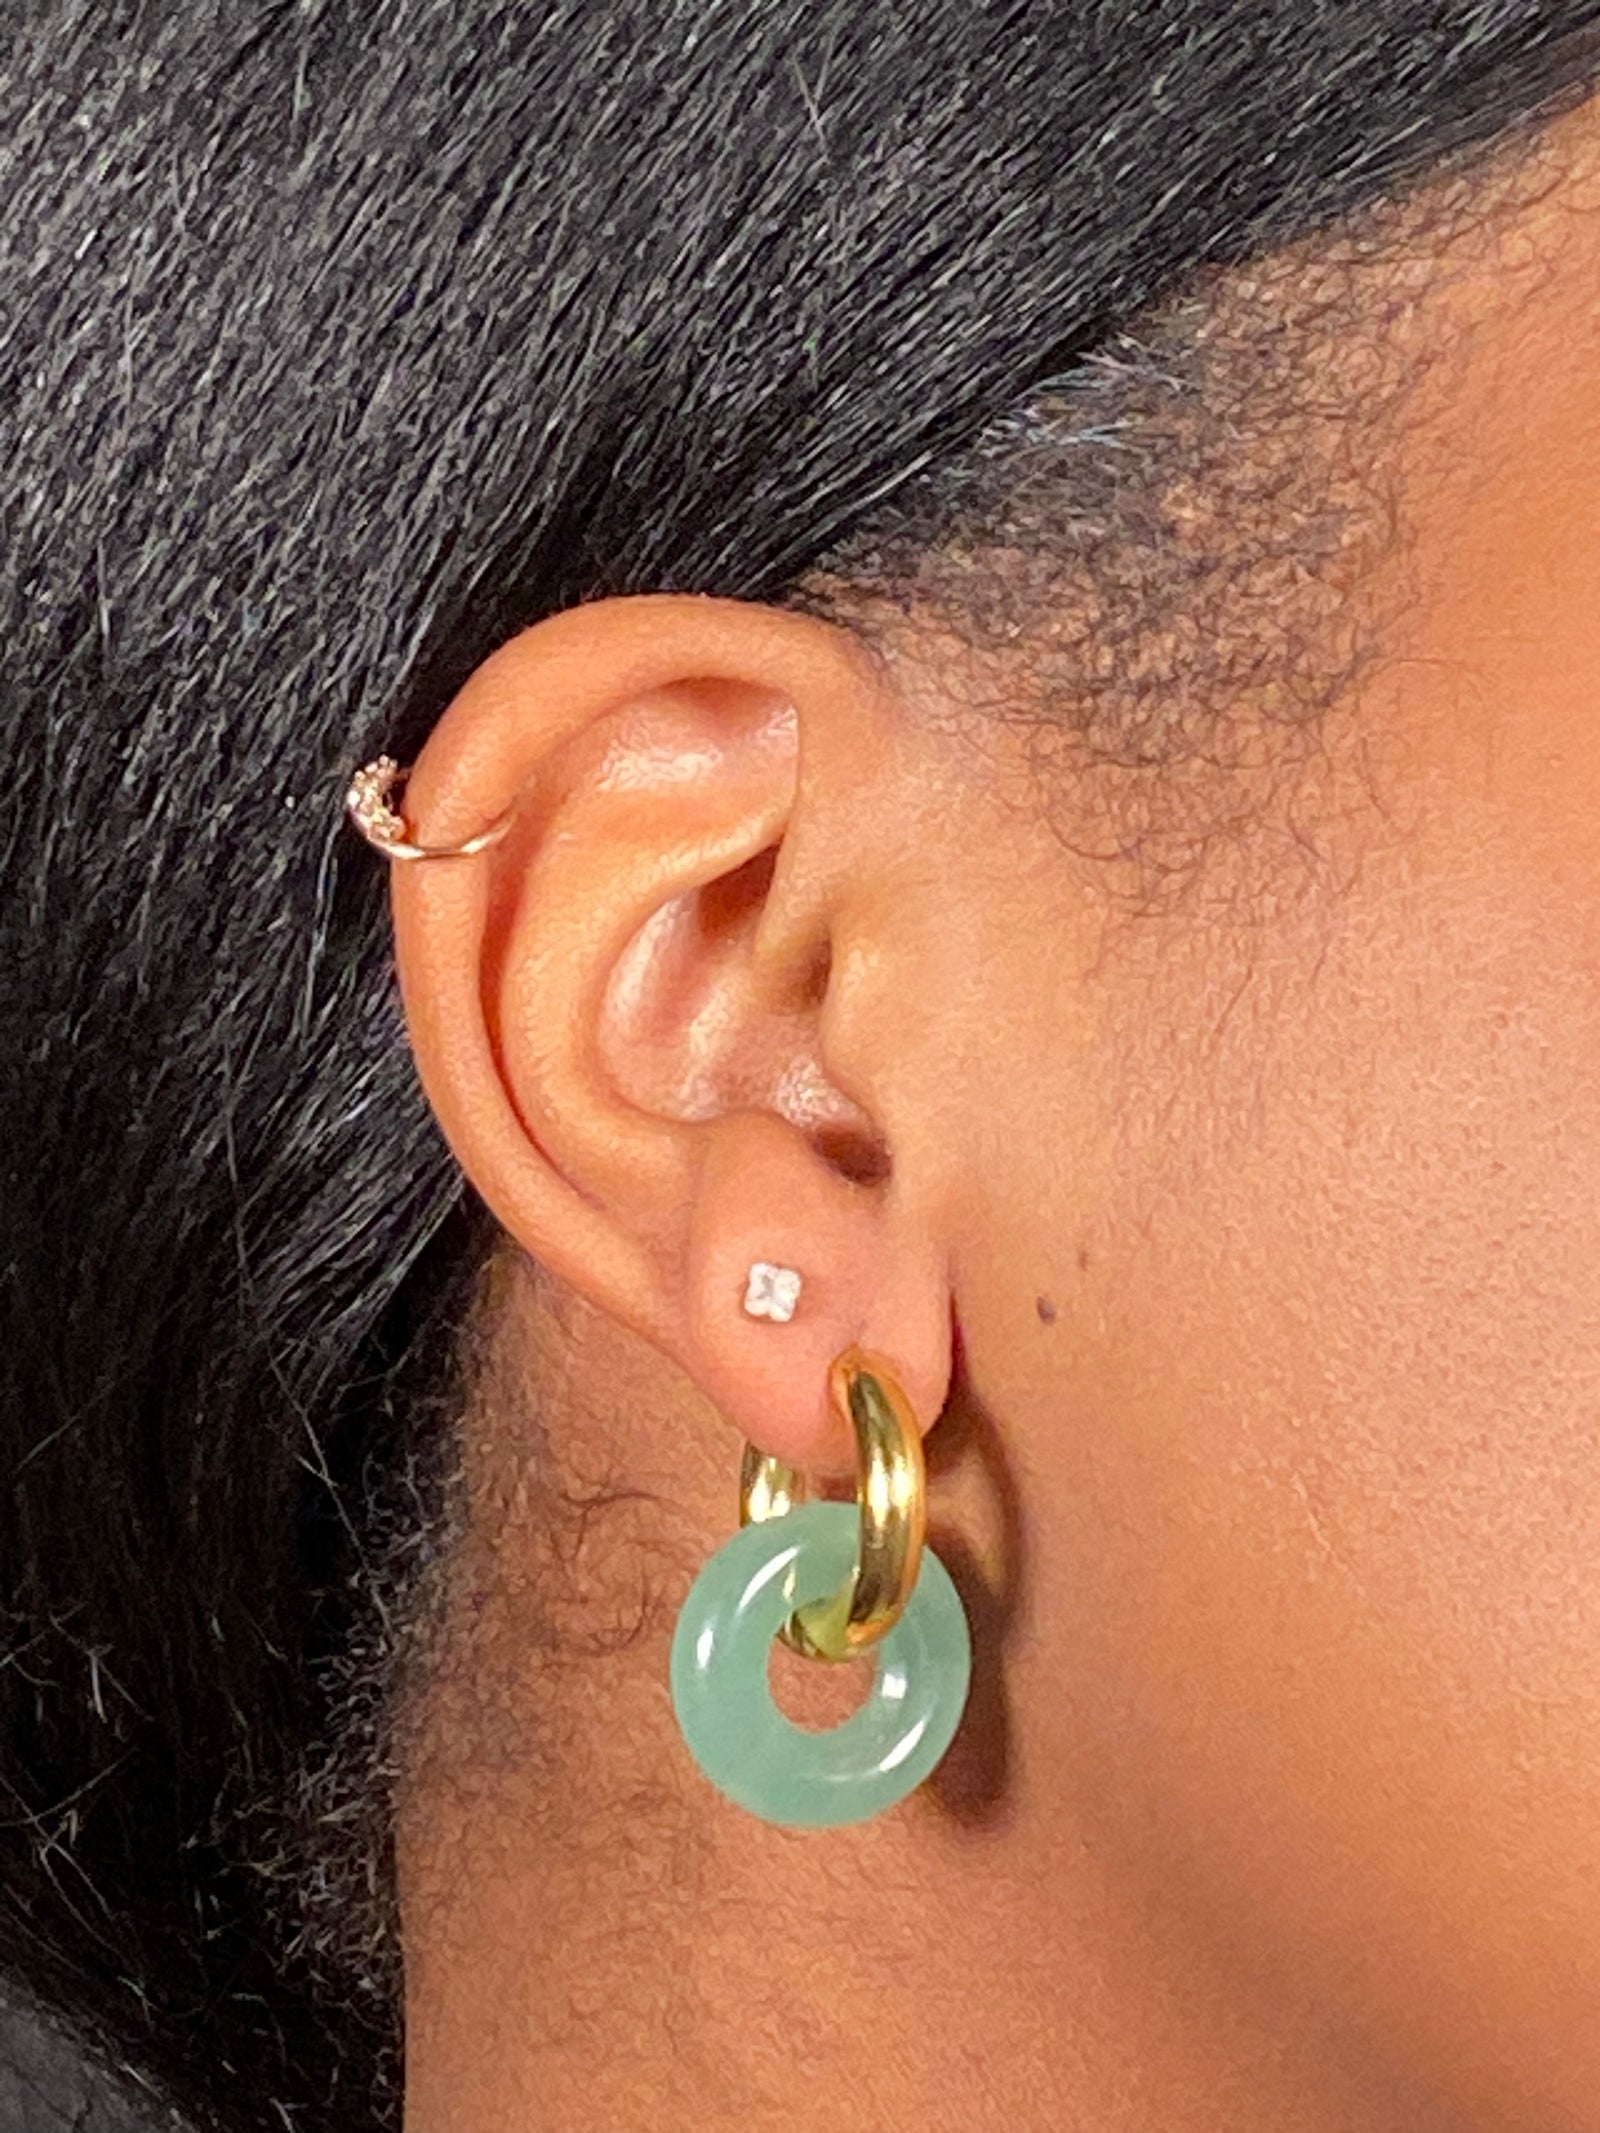 Green Aventurine Earrings